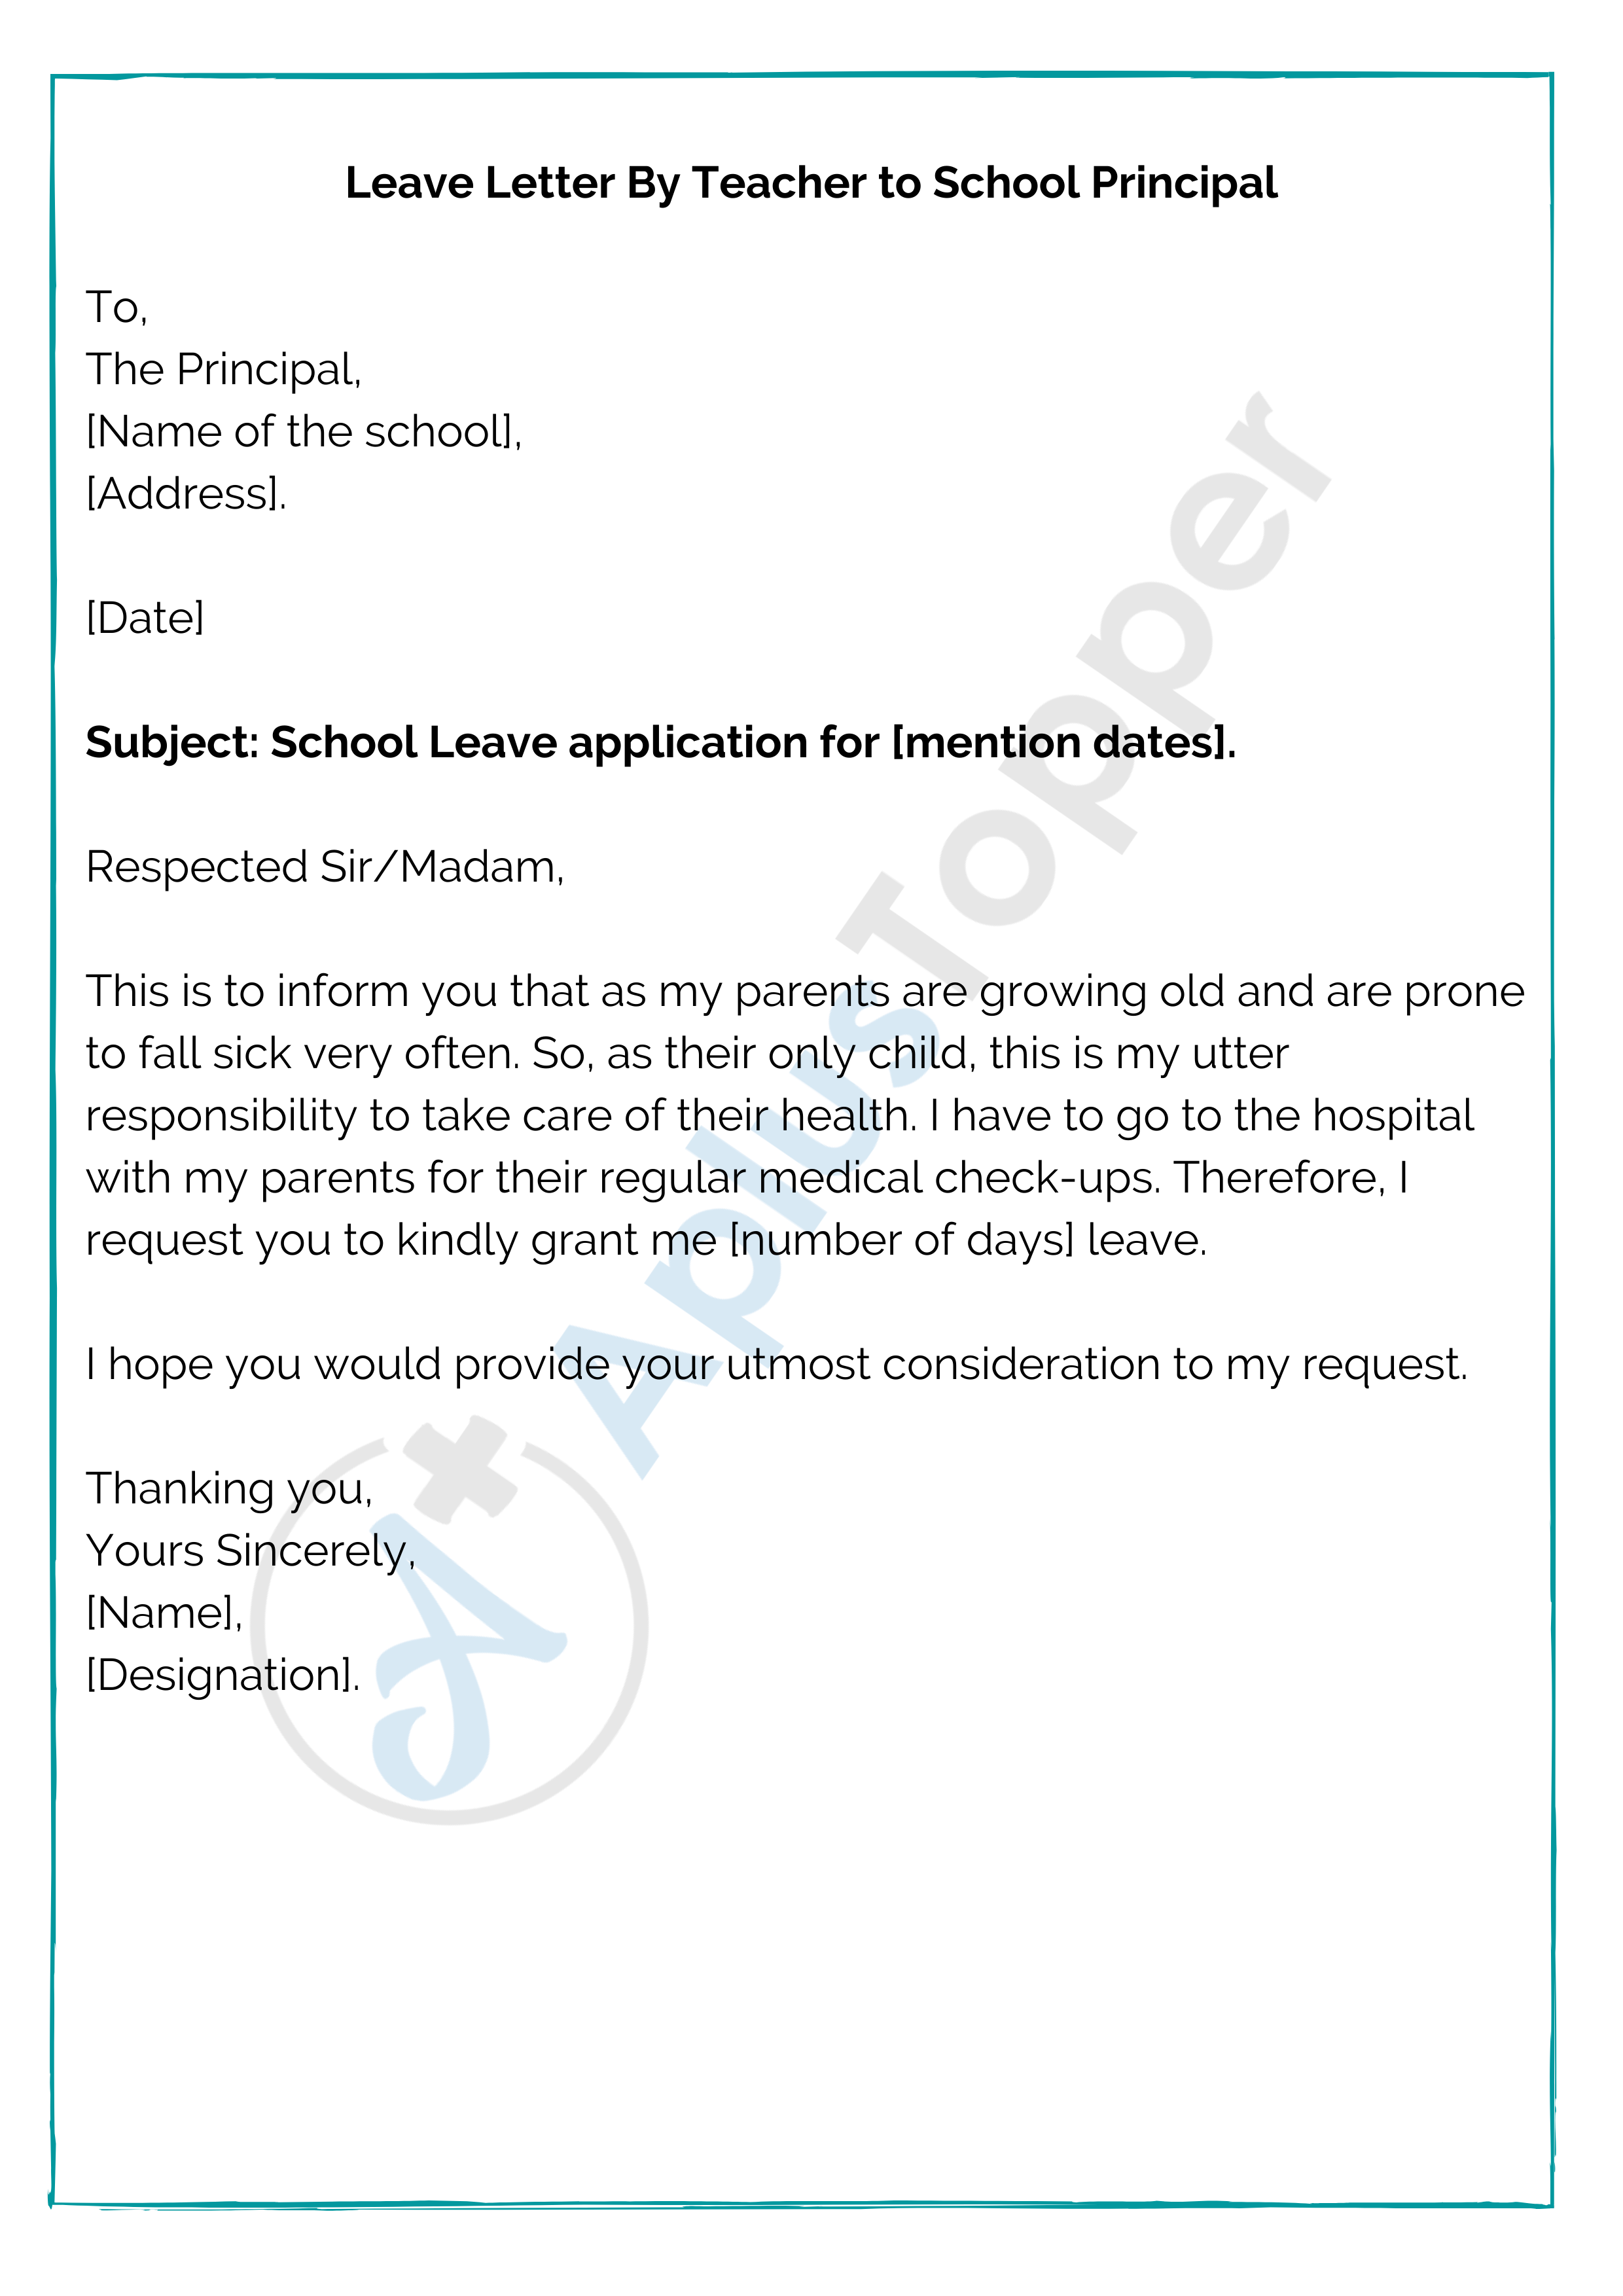 leave application letter by teacher